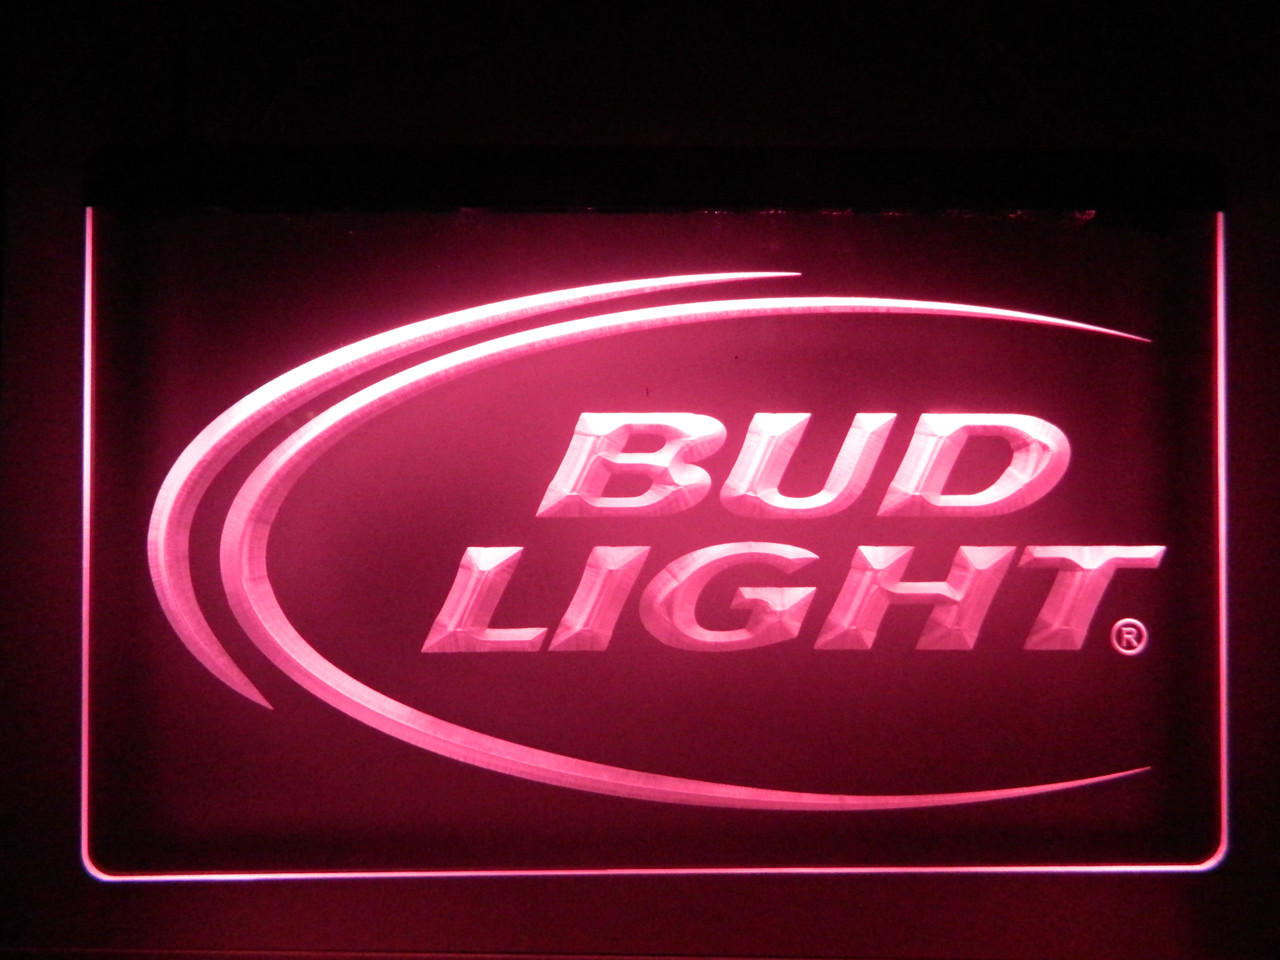 Bud Light St Louis Blues 50th Anniversary Neon Sign NHL Sports Neon Light